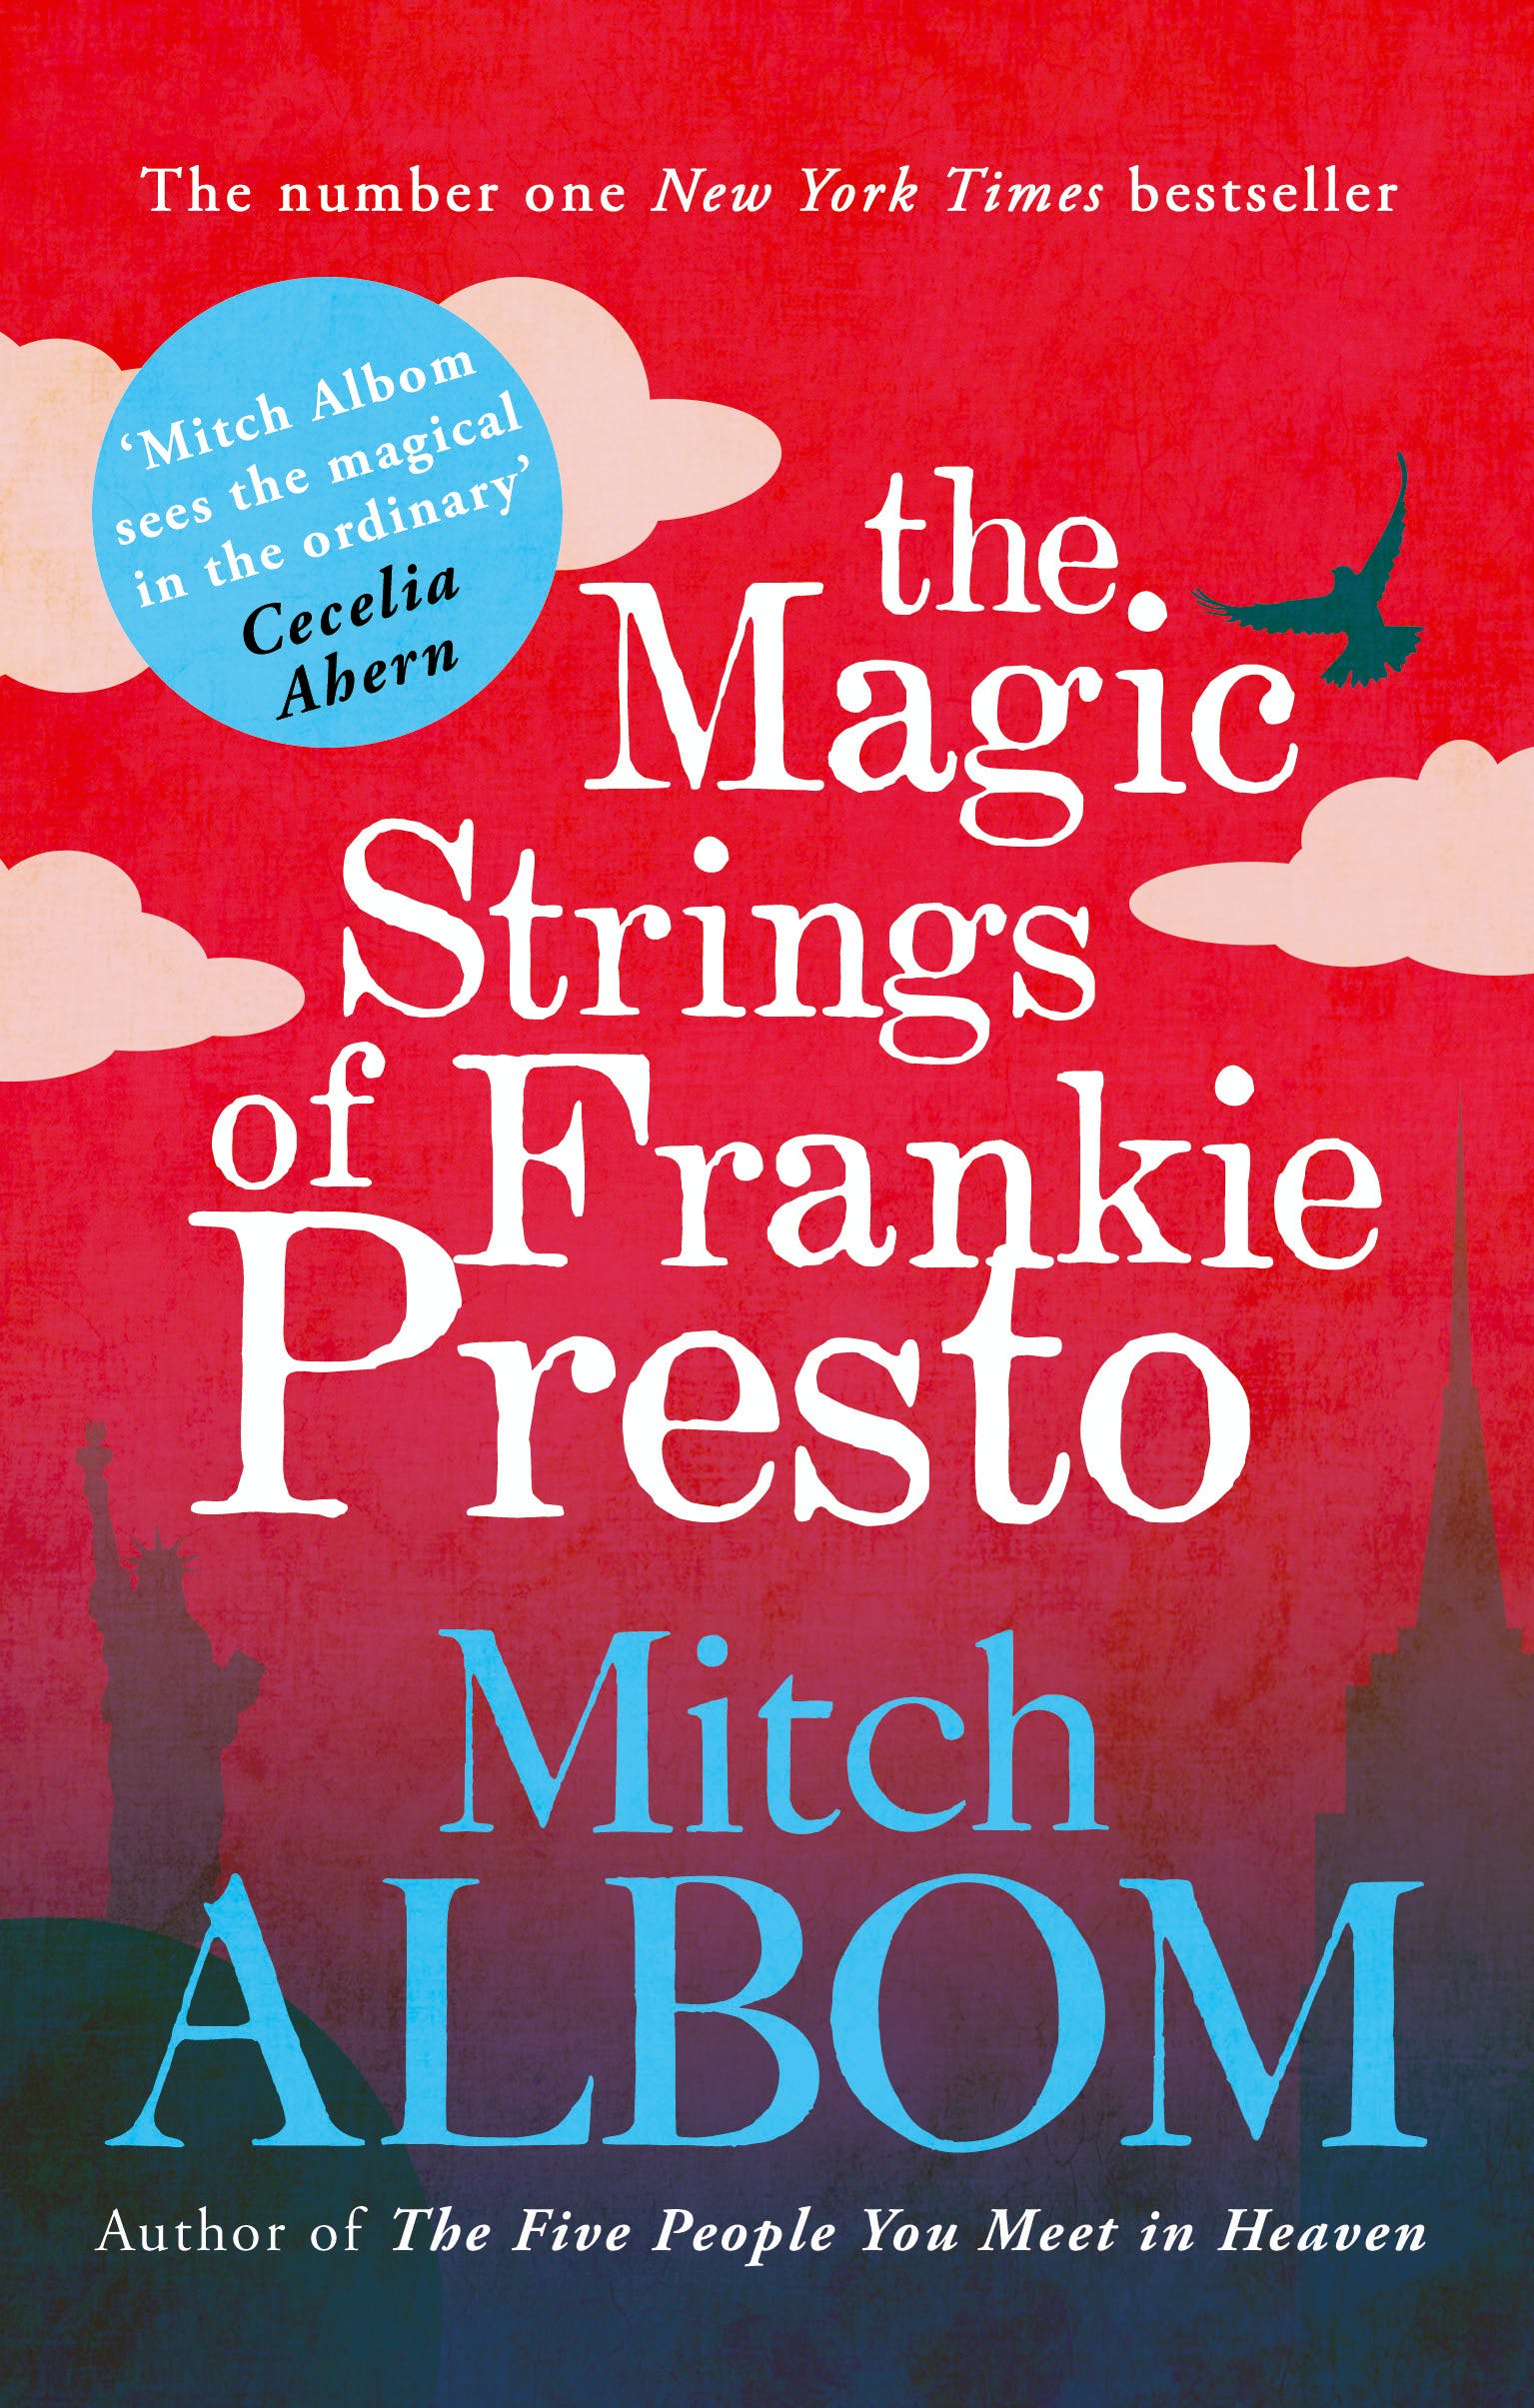 The Magic Strings of Frankie Presto - Mitch Albom